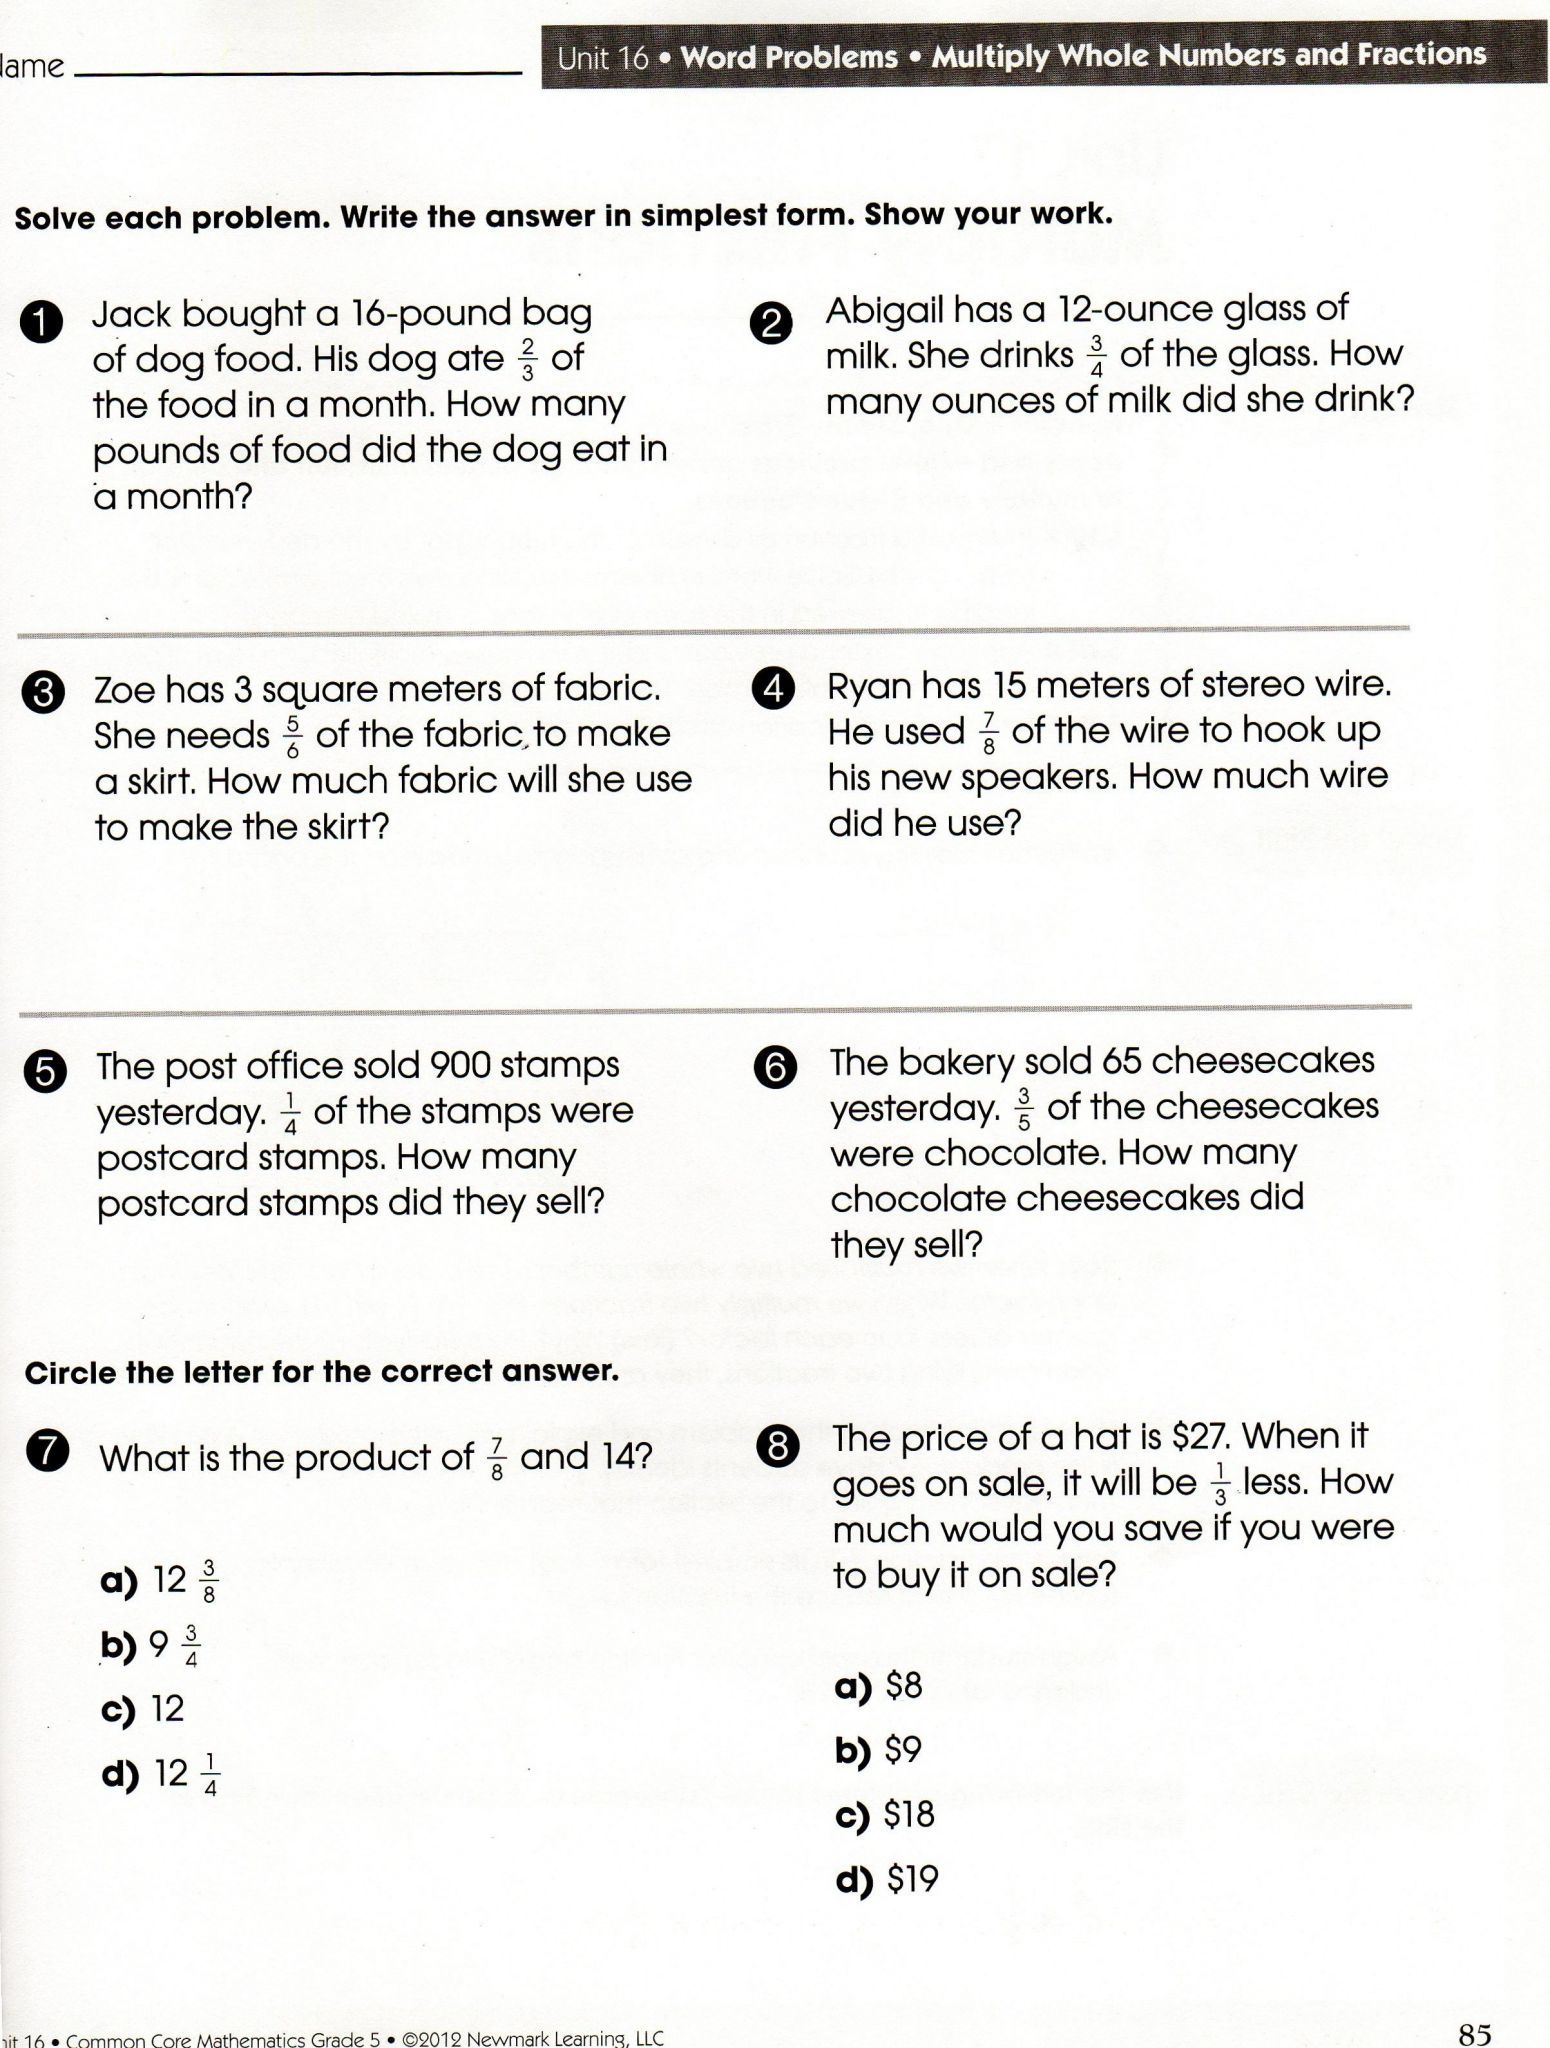 better word problems worksheet fresh collection of math worksheets 5th grade word problems of better